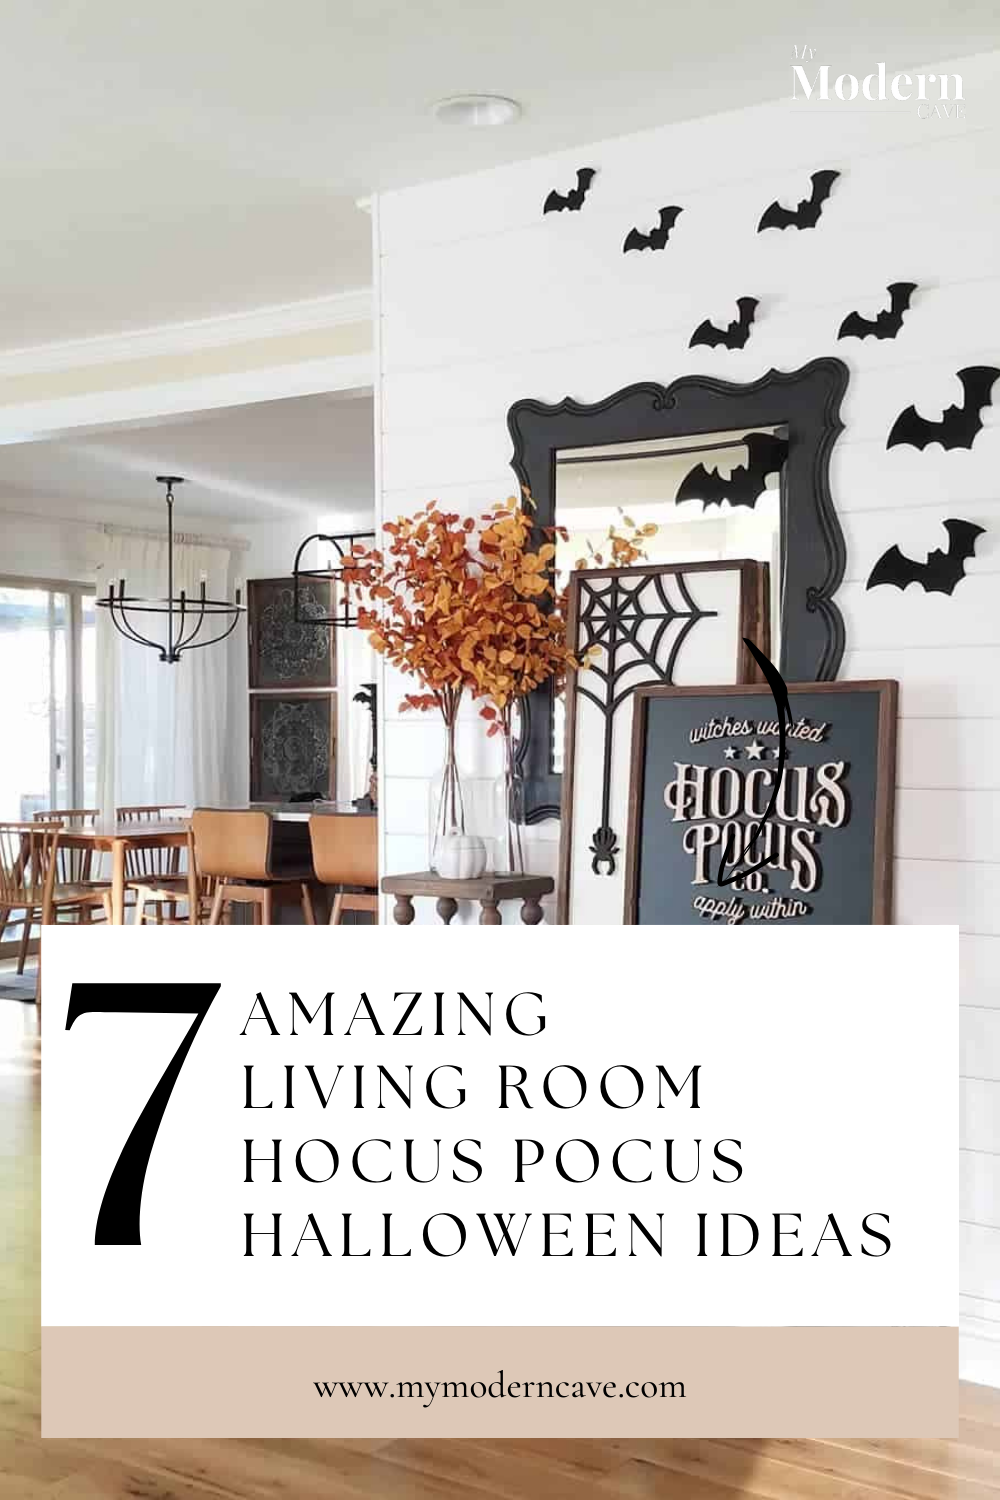 Living Room Hocus Pocus Halloween Ideas Infographic